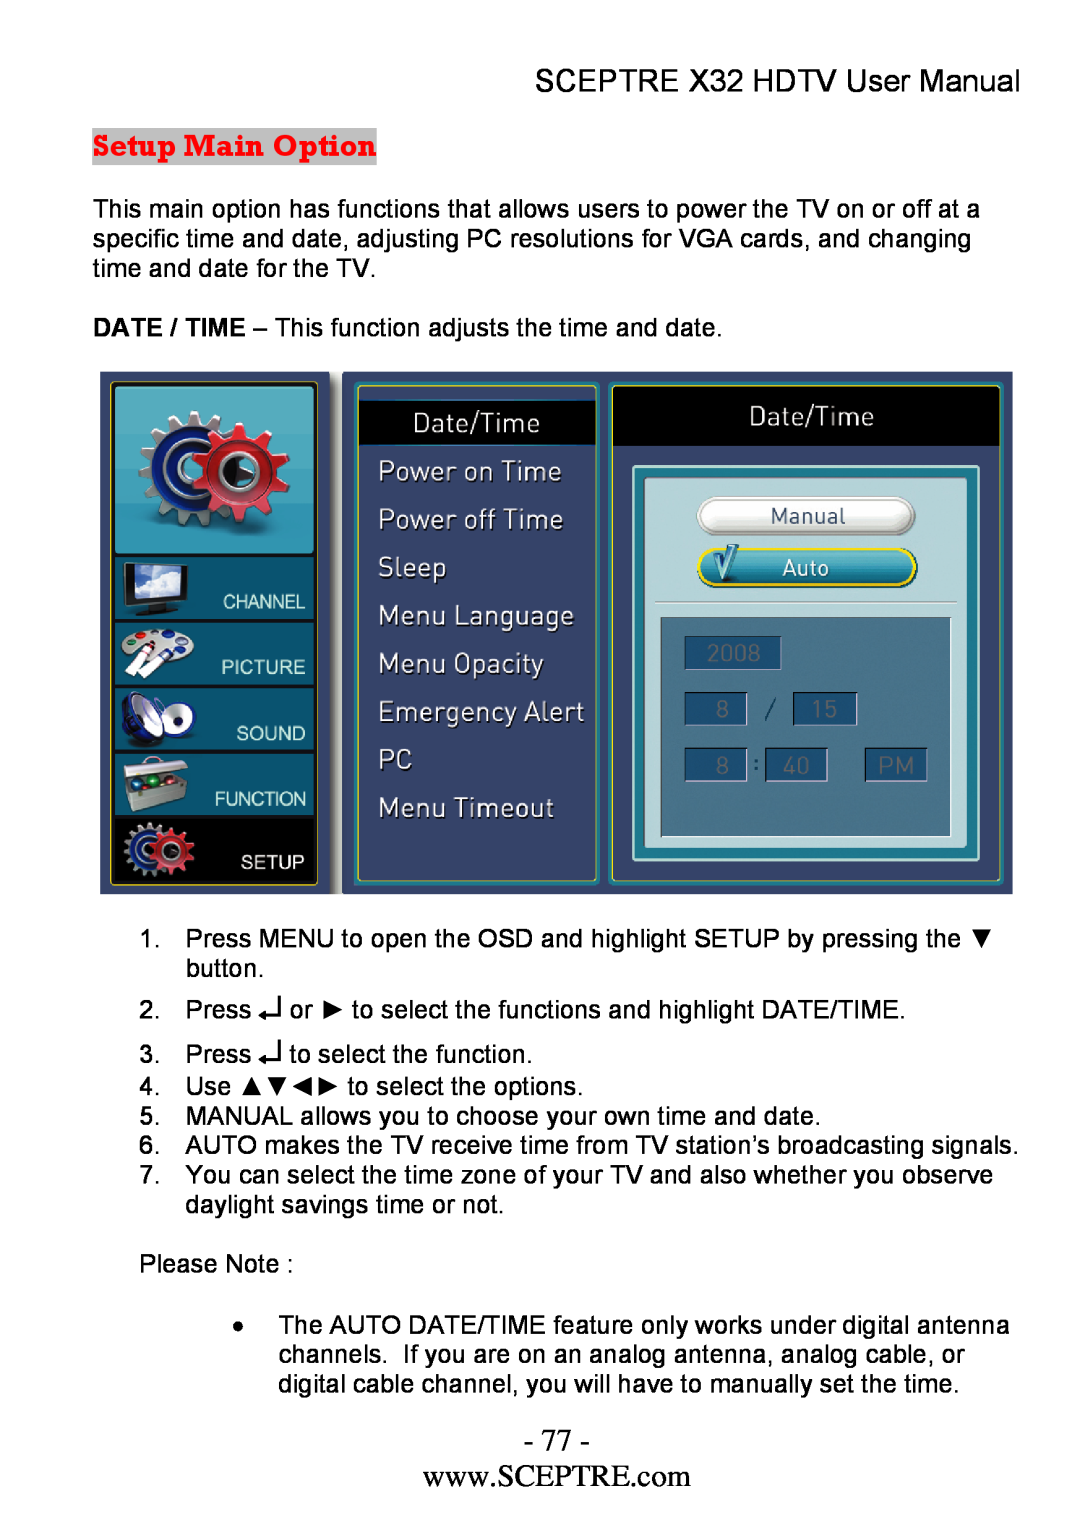 Sceptre Technologies x32 user manual Setup Main Option, SCEPTRE X32 HDTV User Manual 